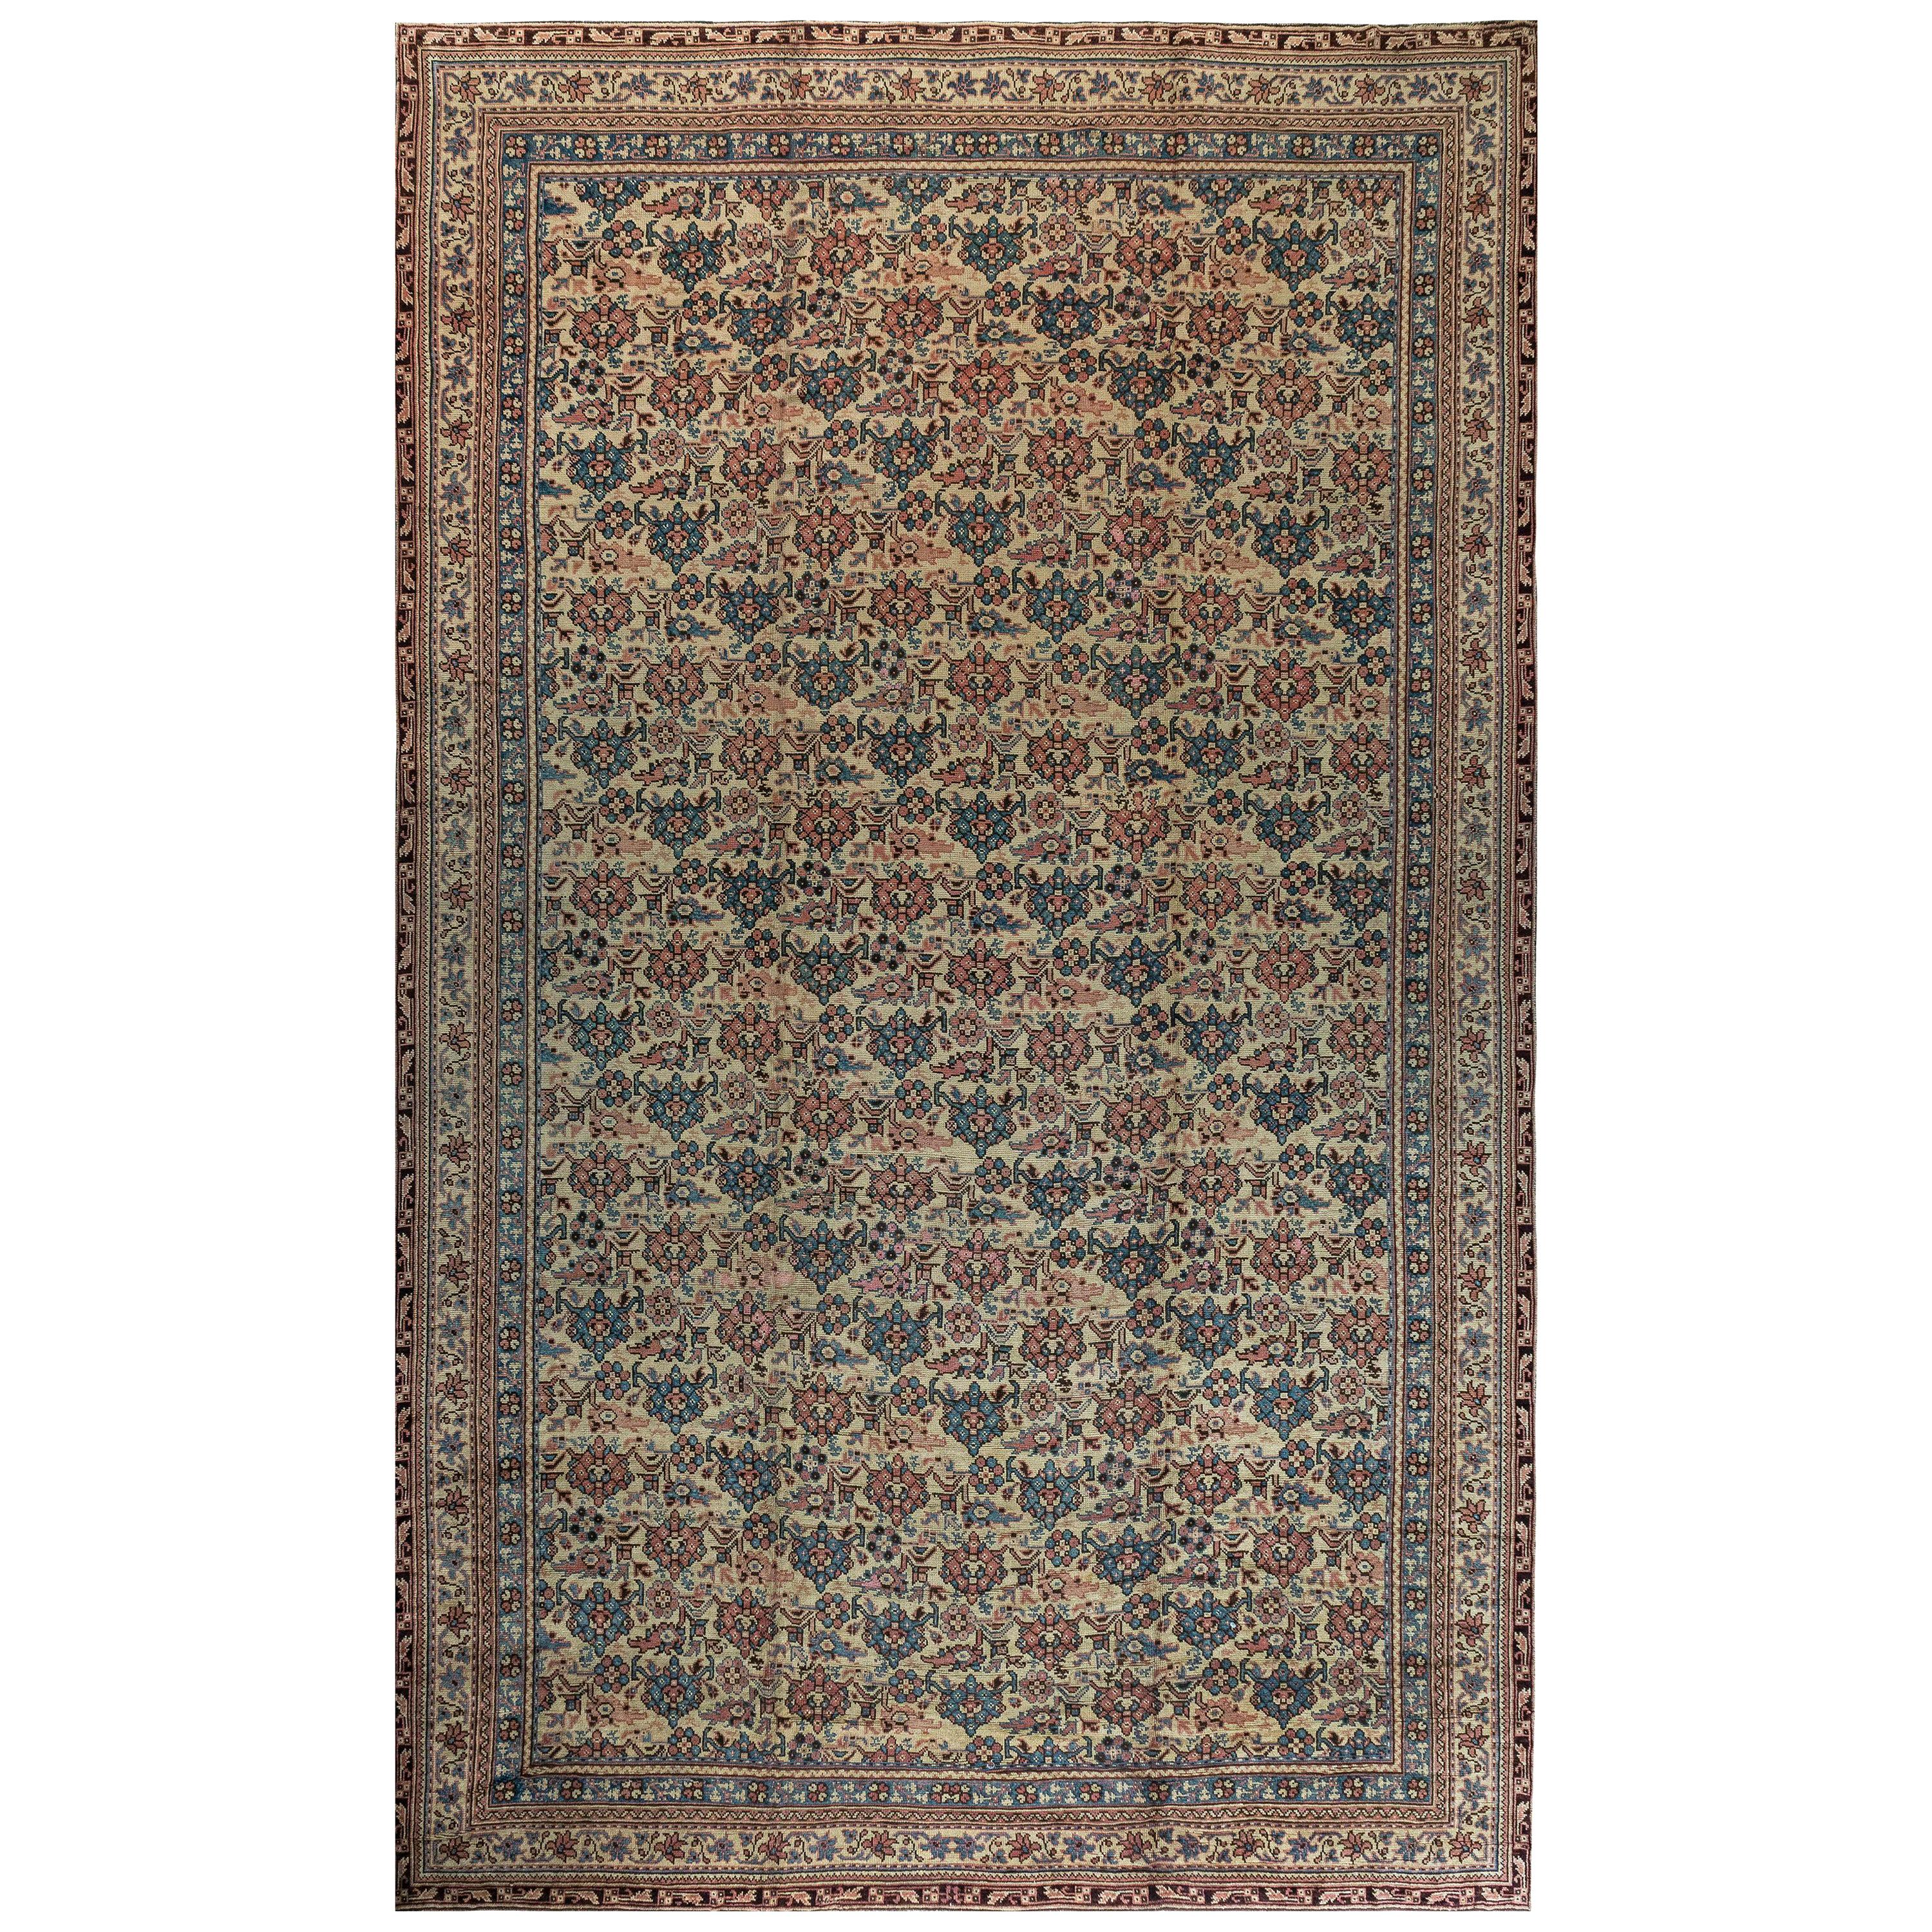 1900s Turkish Oushak Botanic Handmade Wool Carpet For Sale